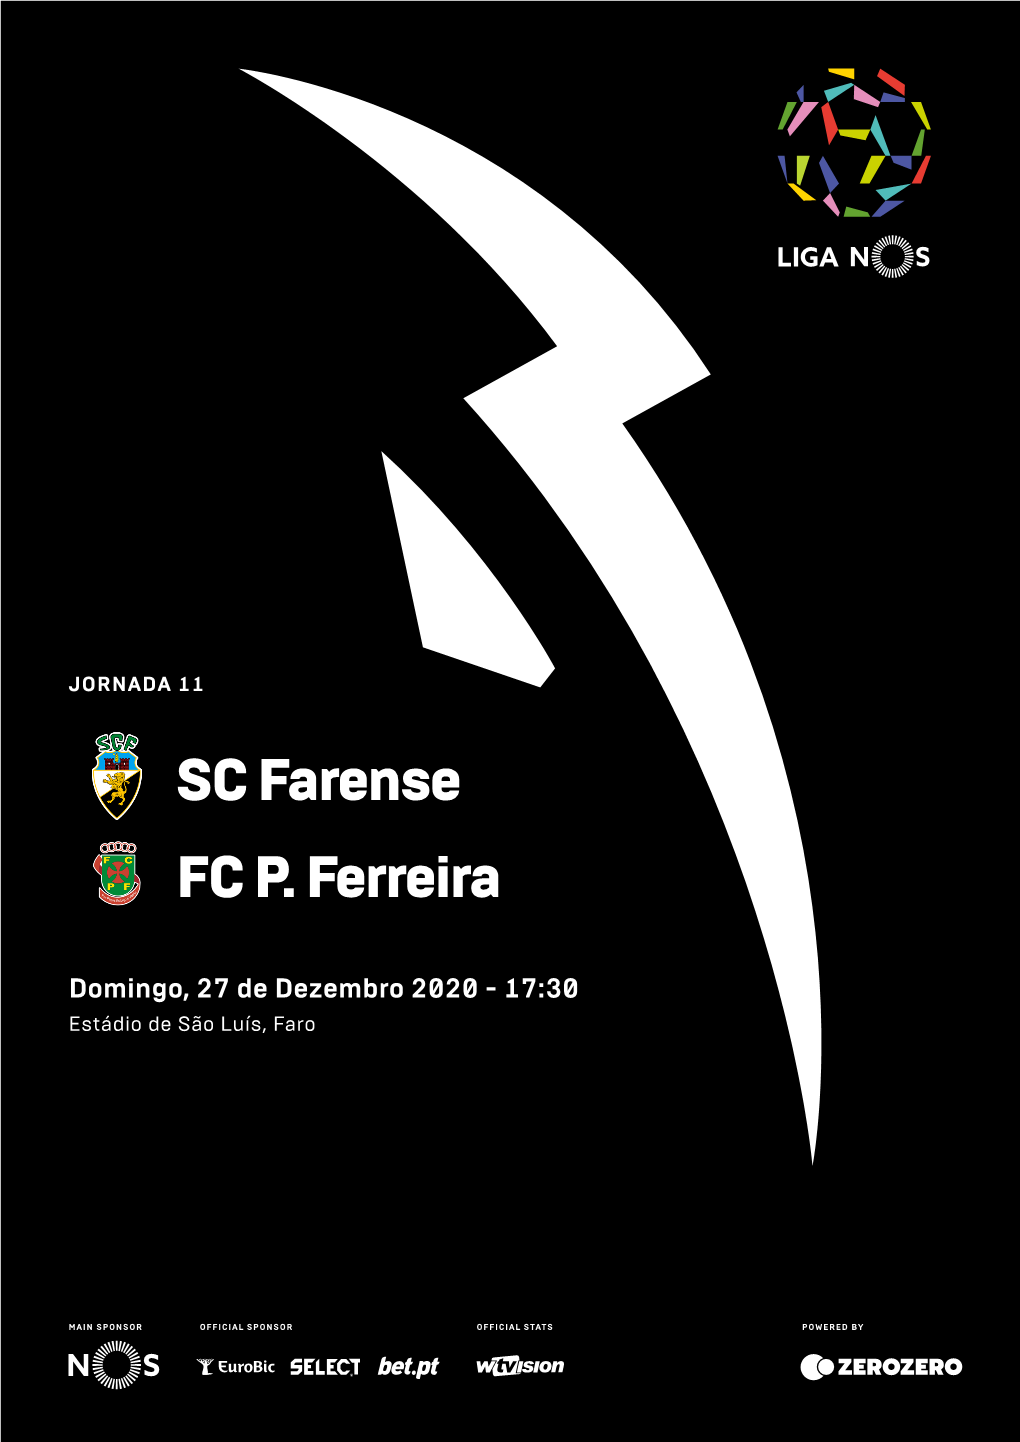 SC Farense FC P. Ferreira